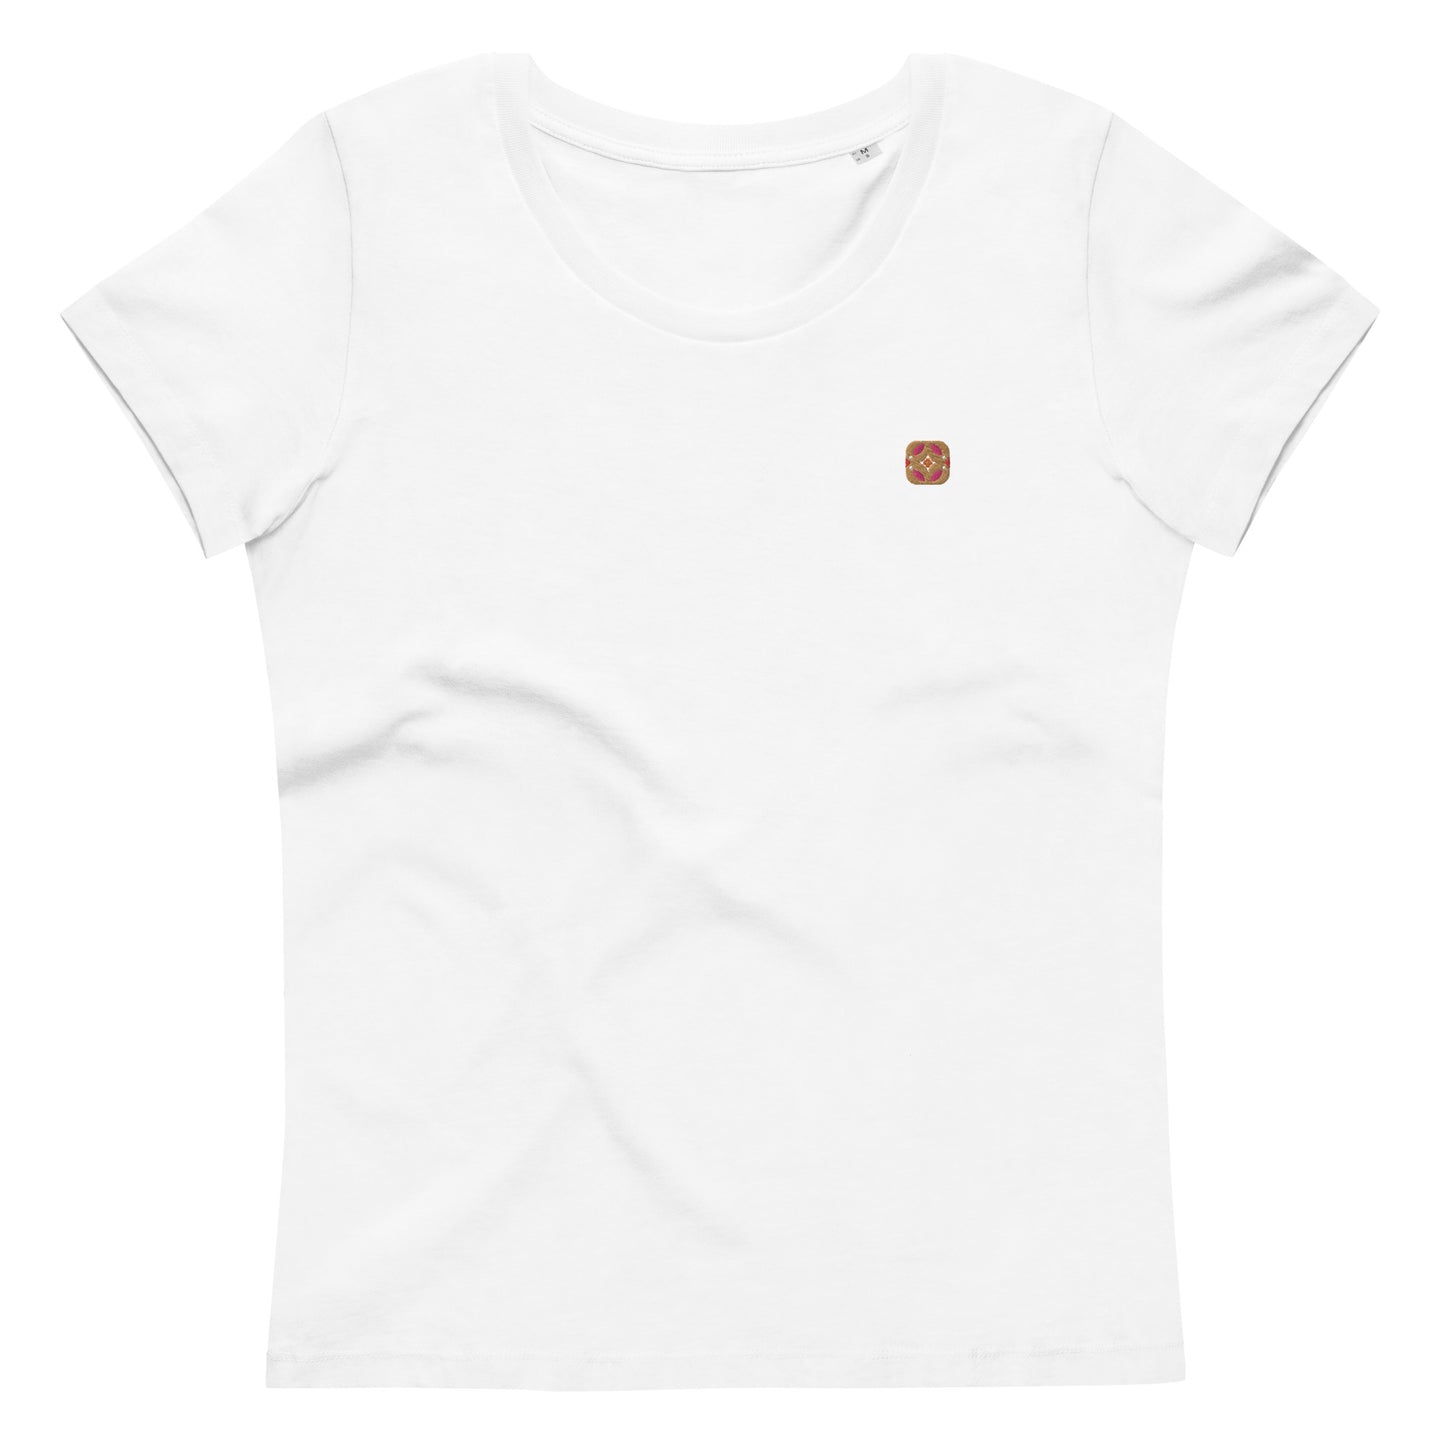 Embroidered spring birds Bauhaus style white T-shirt in organic cotton - Women white